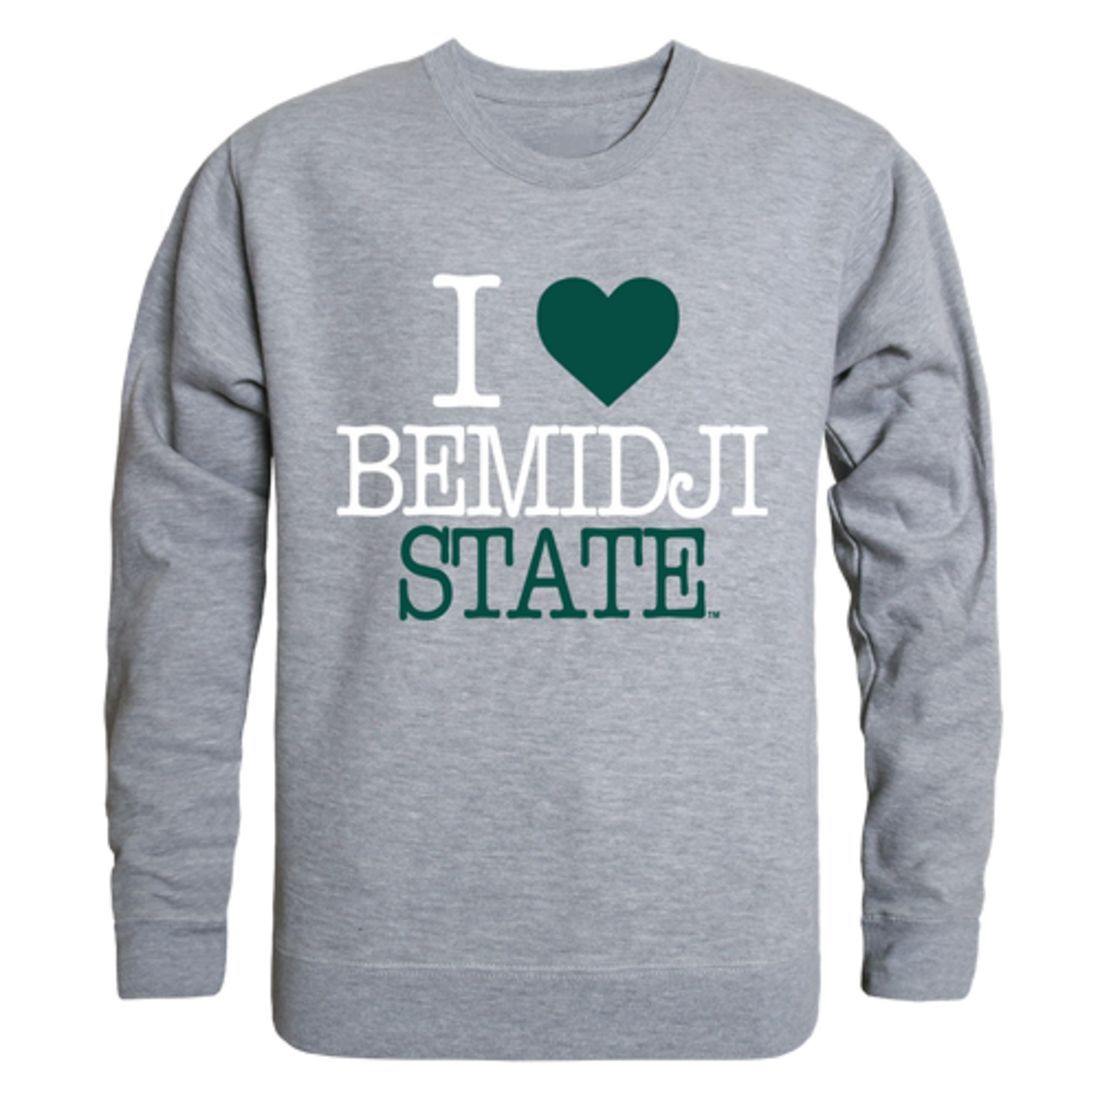 I Love BSU Bemidji State University Beavers Crewneck Pullover Sweatshirt Sweater-Campus-Wardrobe